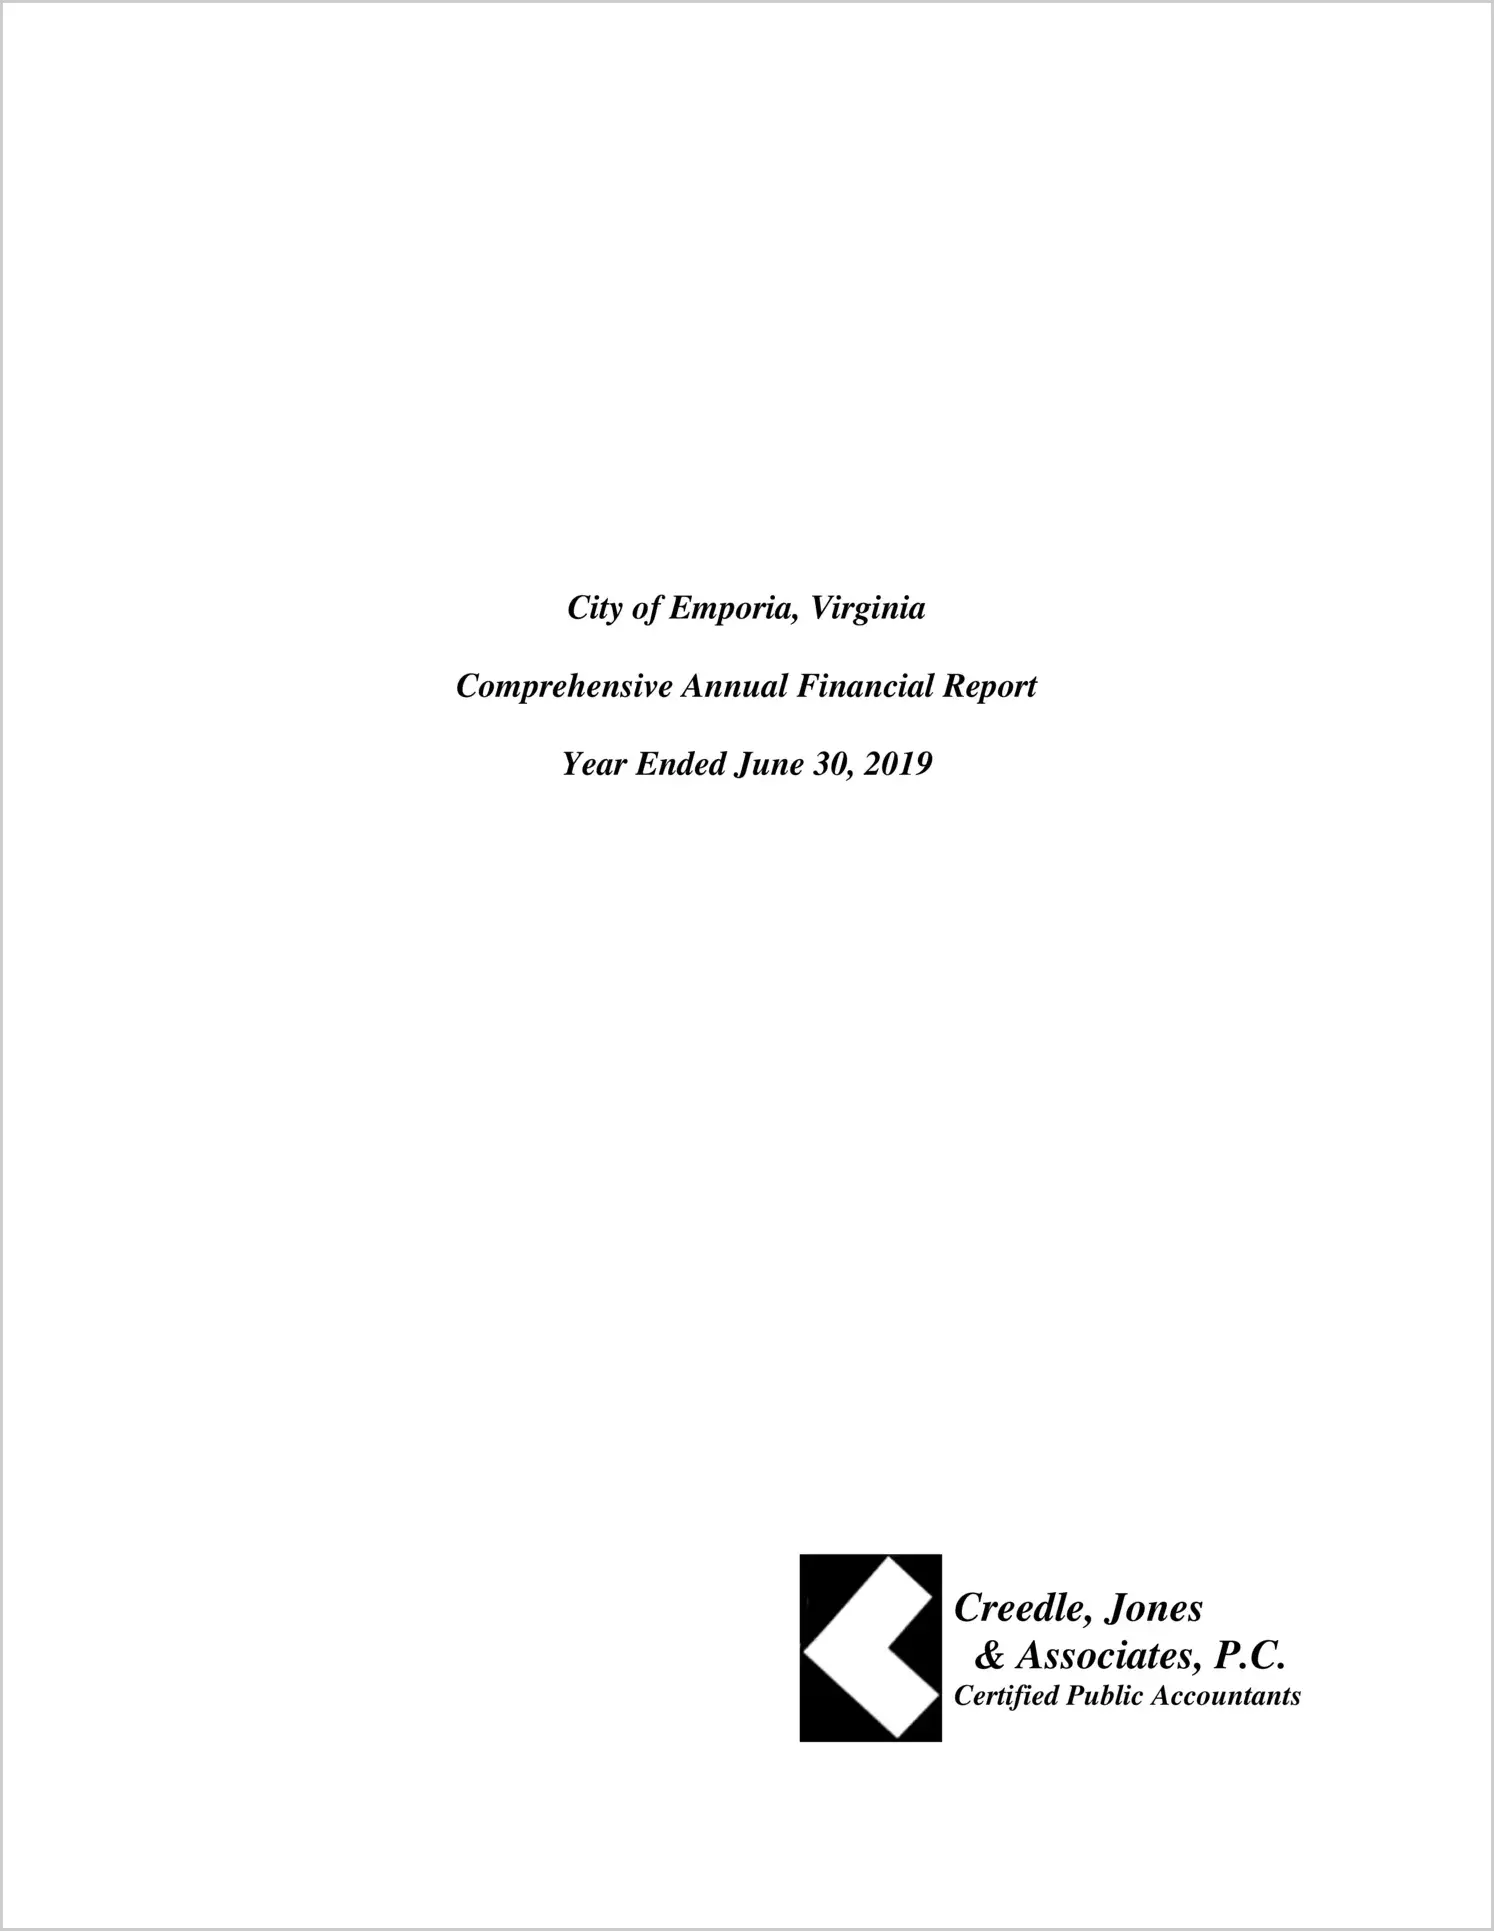 2019 Annual Financial Report for City of Emporia